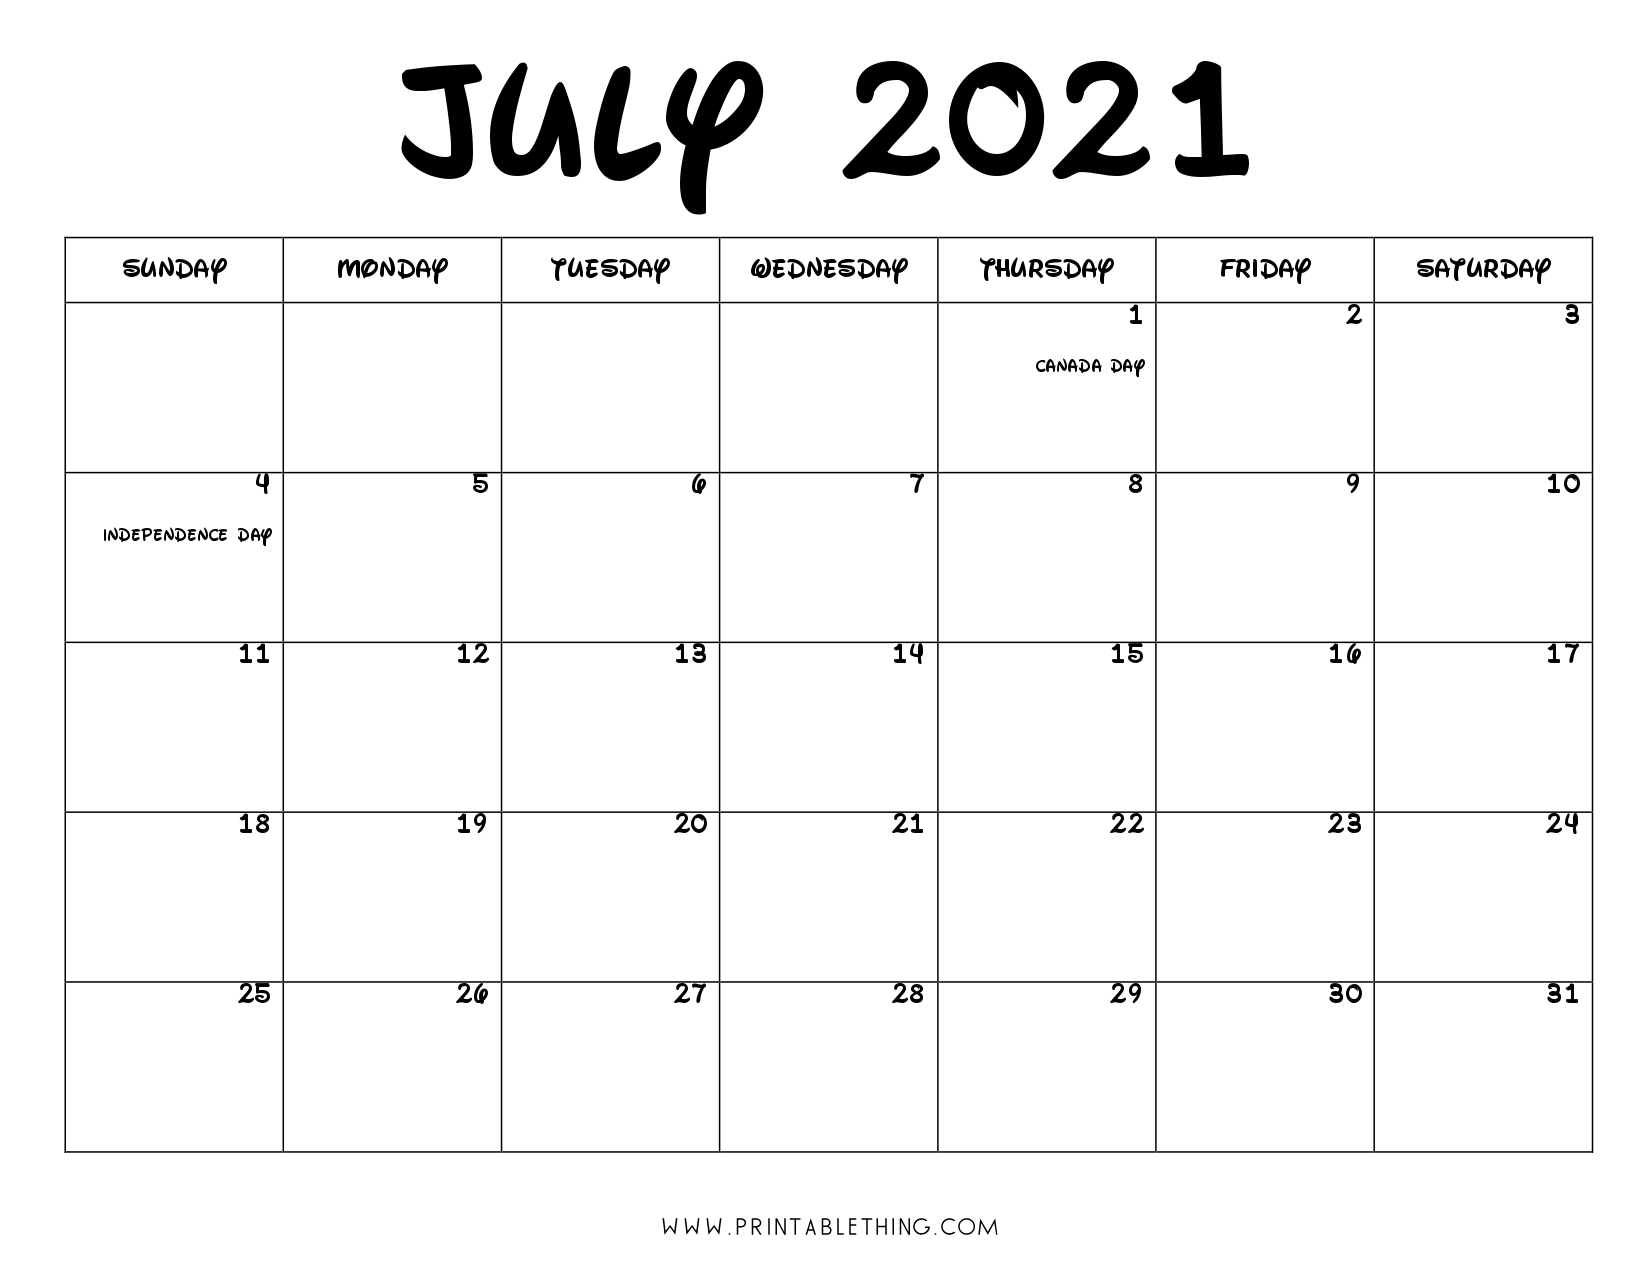 July 2021 Calendar Pdf, July 2021 Calendar Image, Print